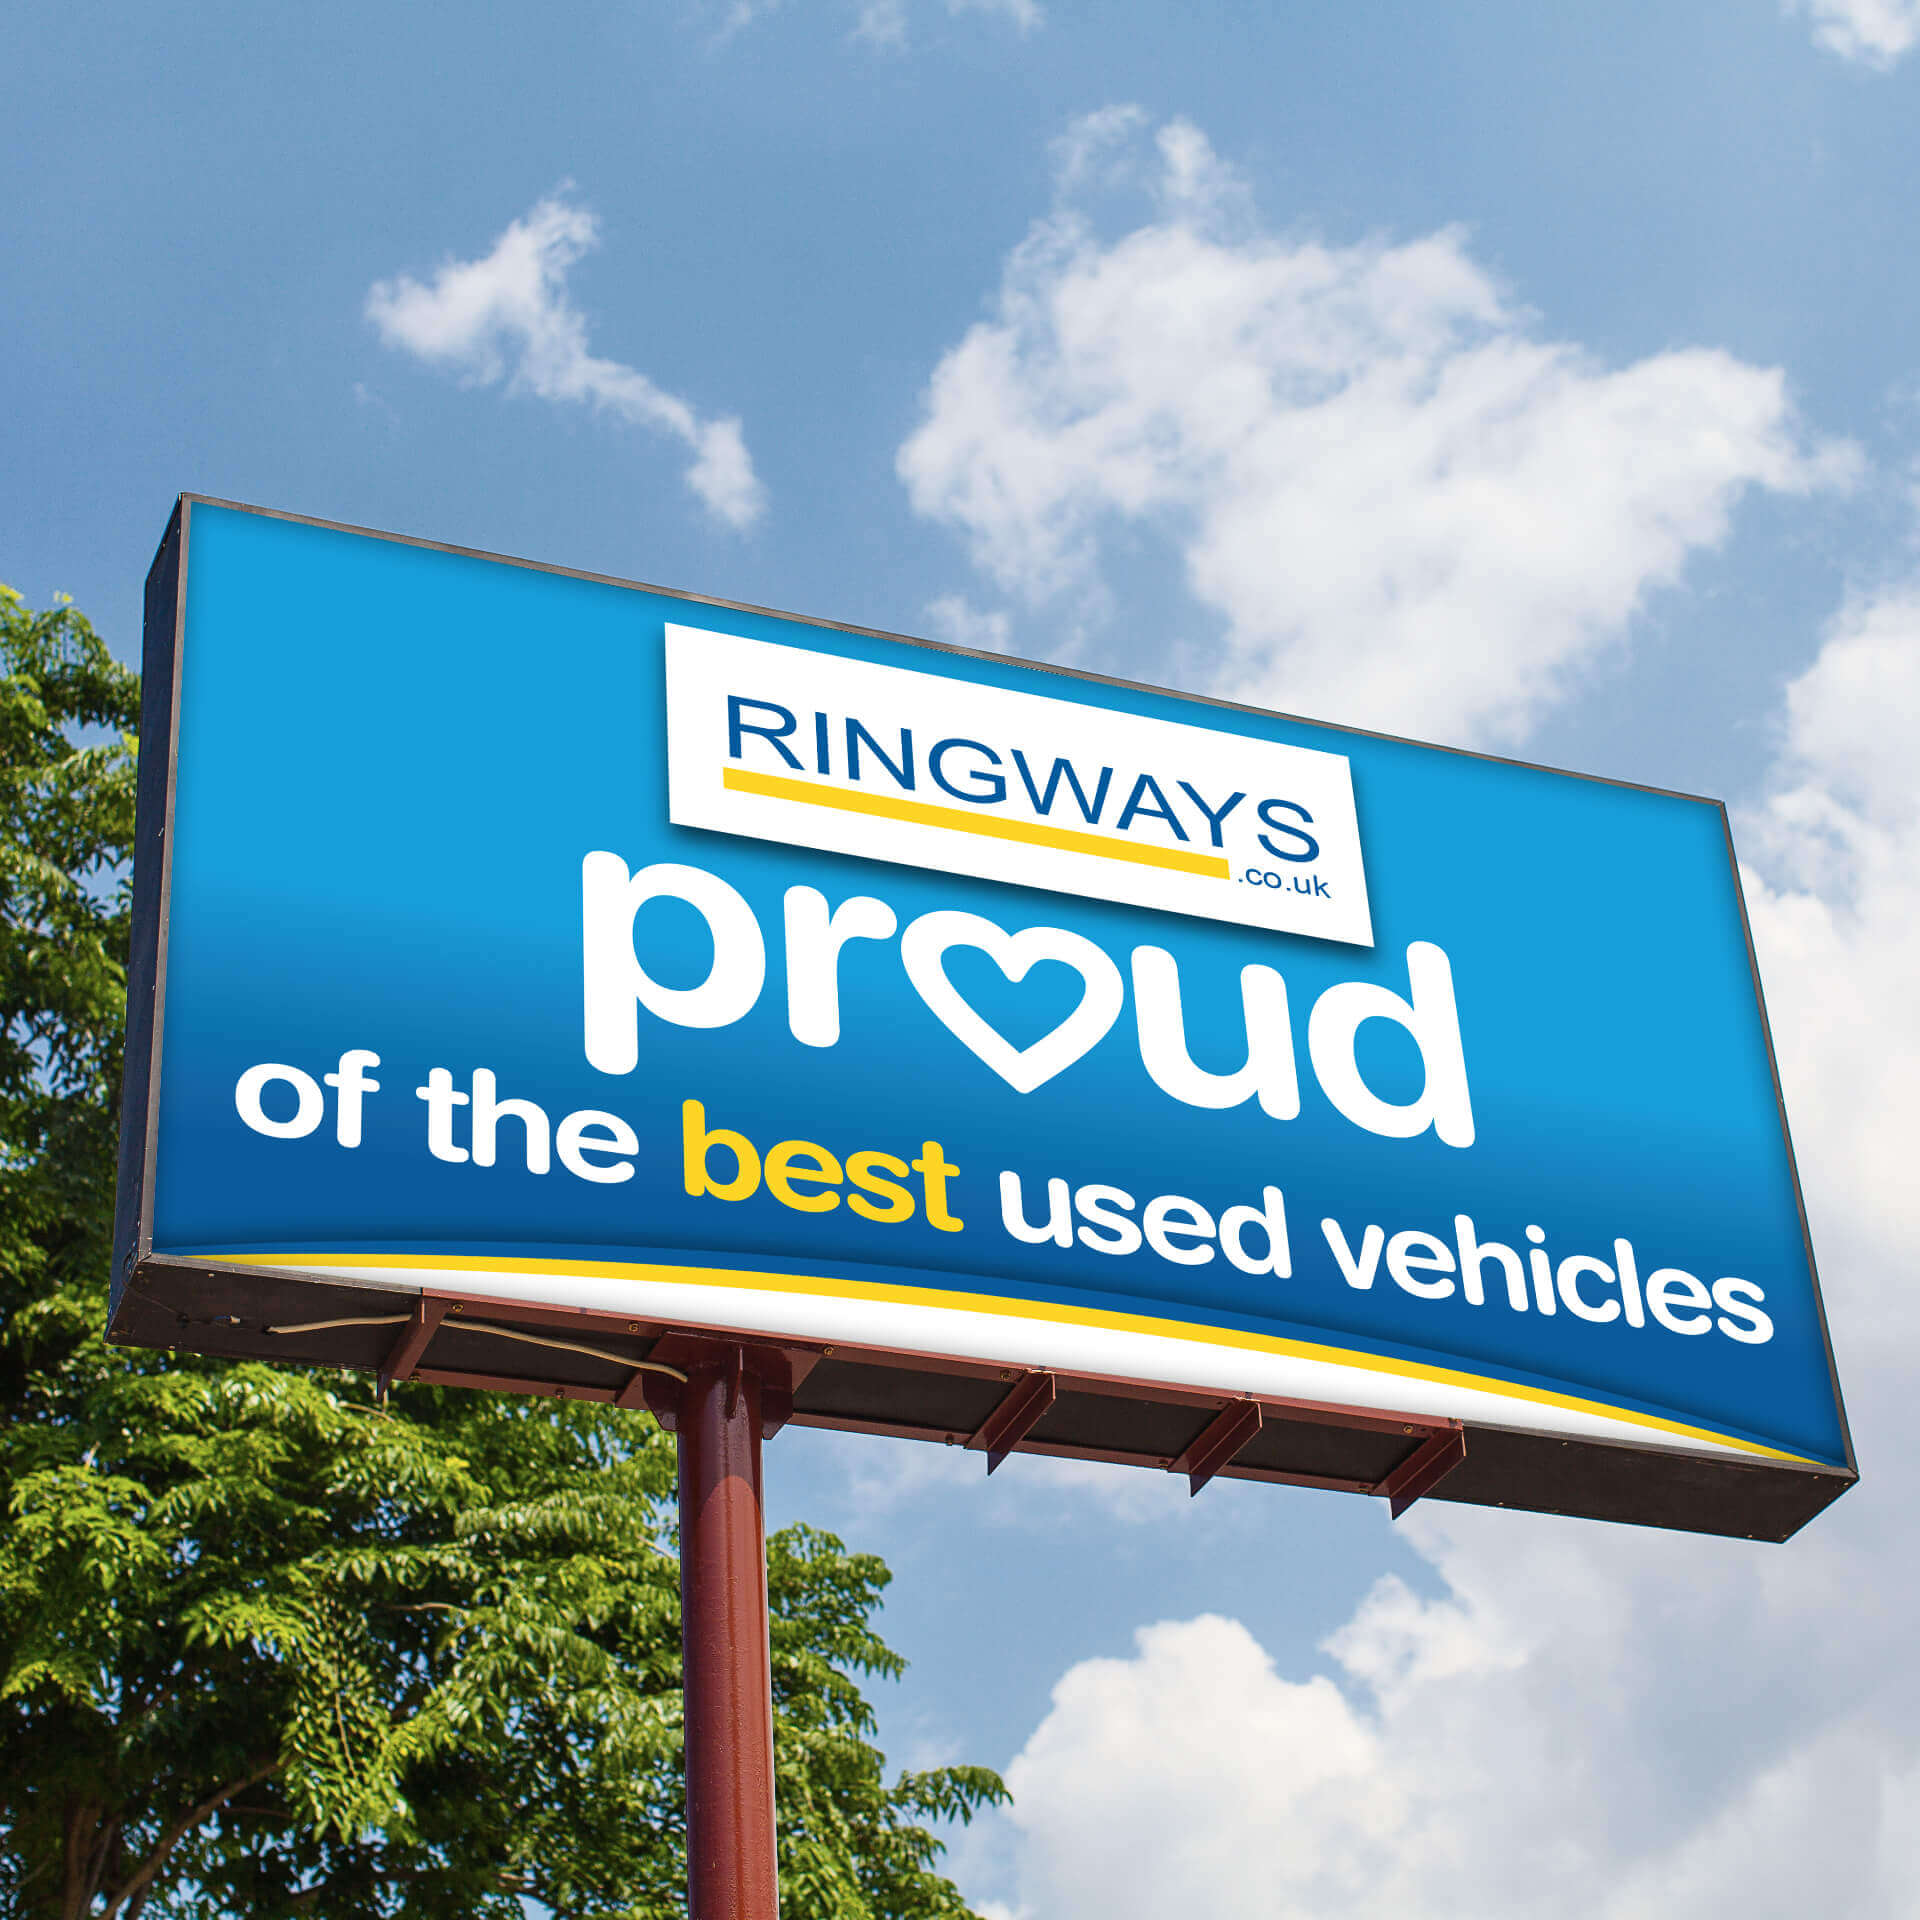 Ringways Proud Billboard